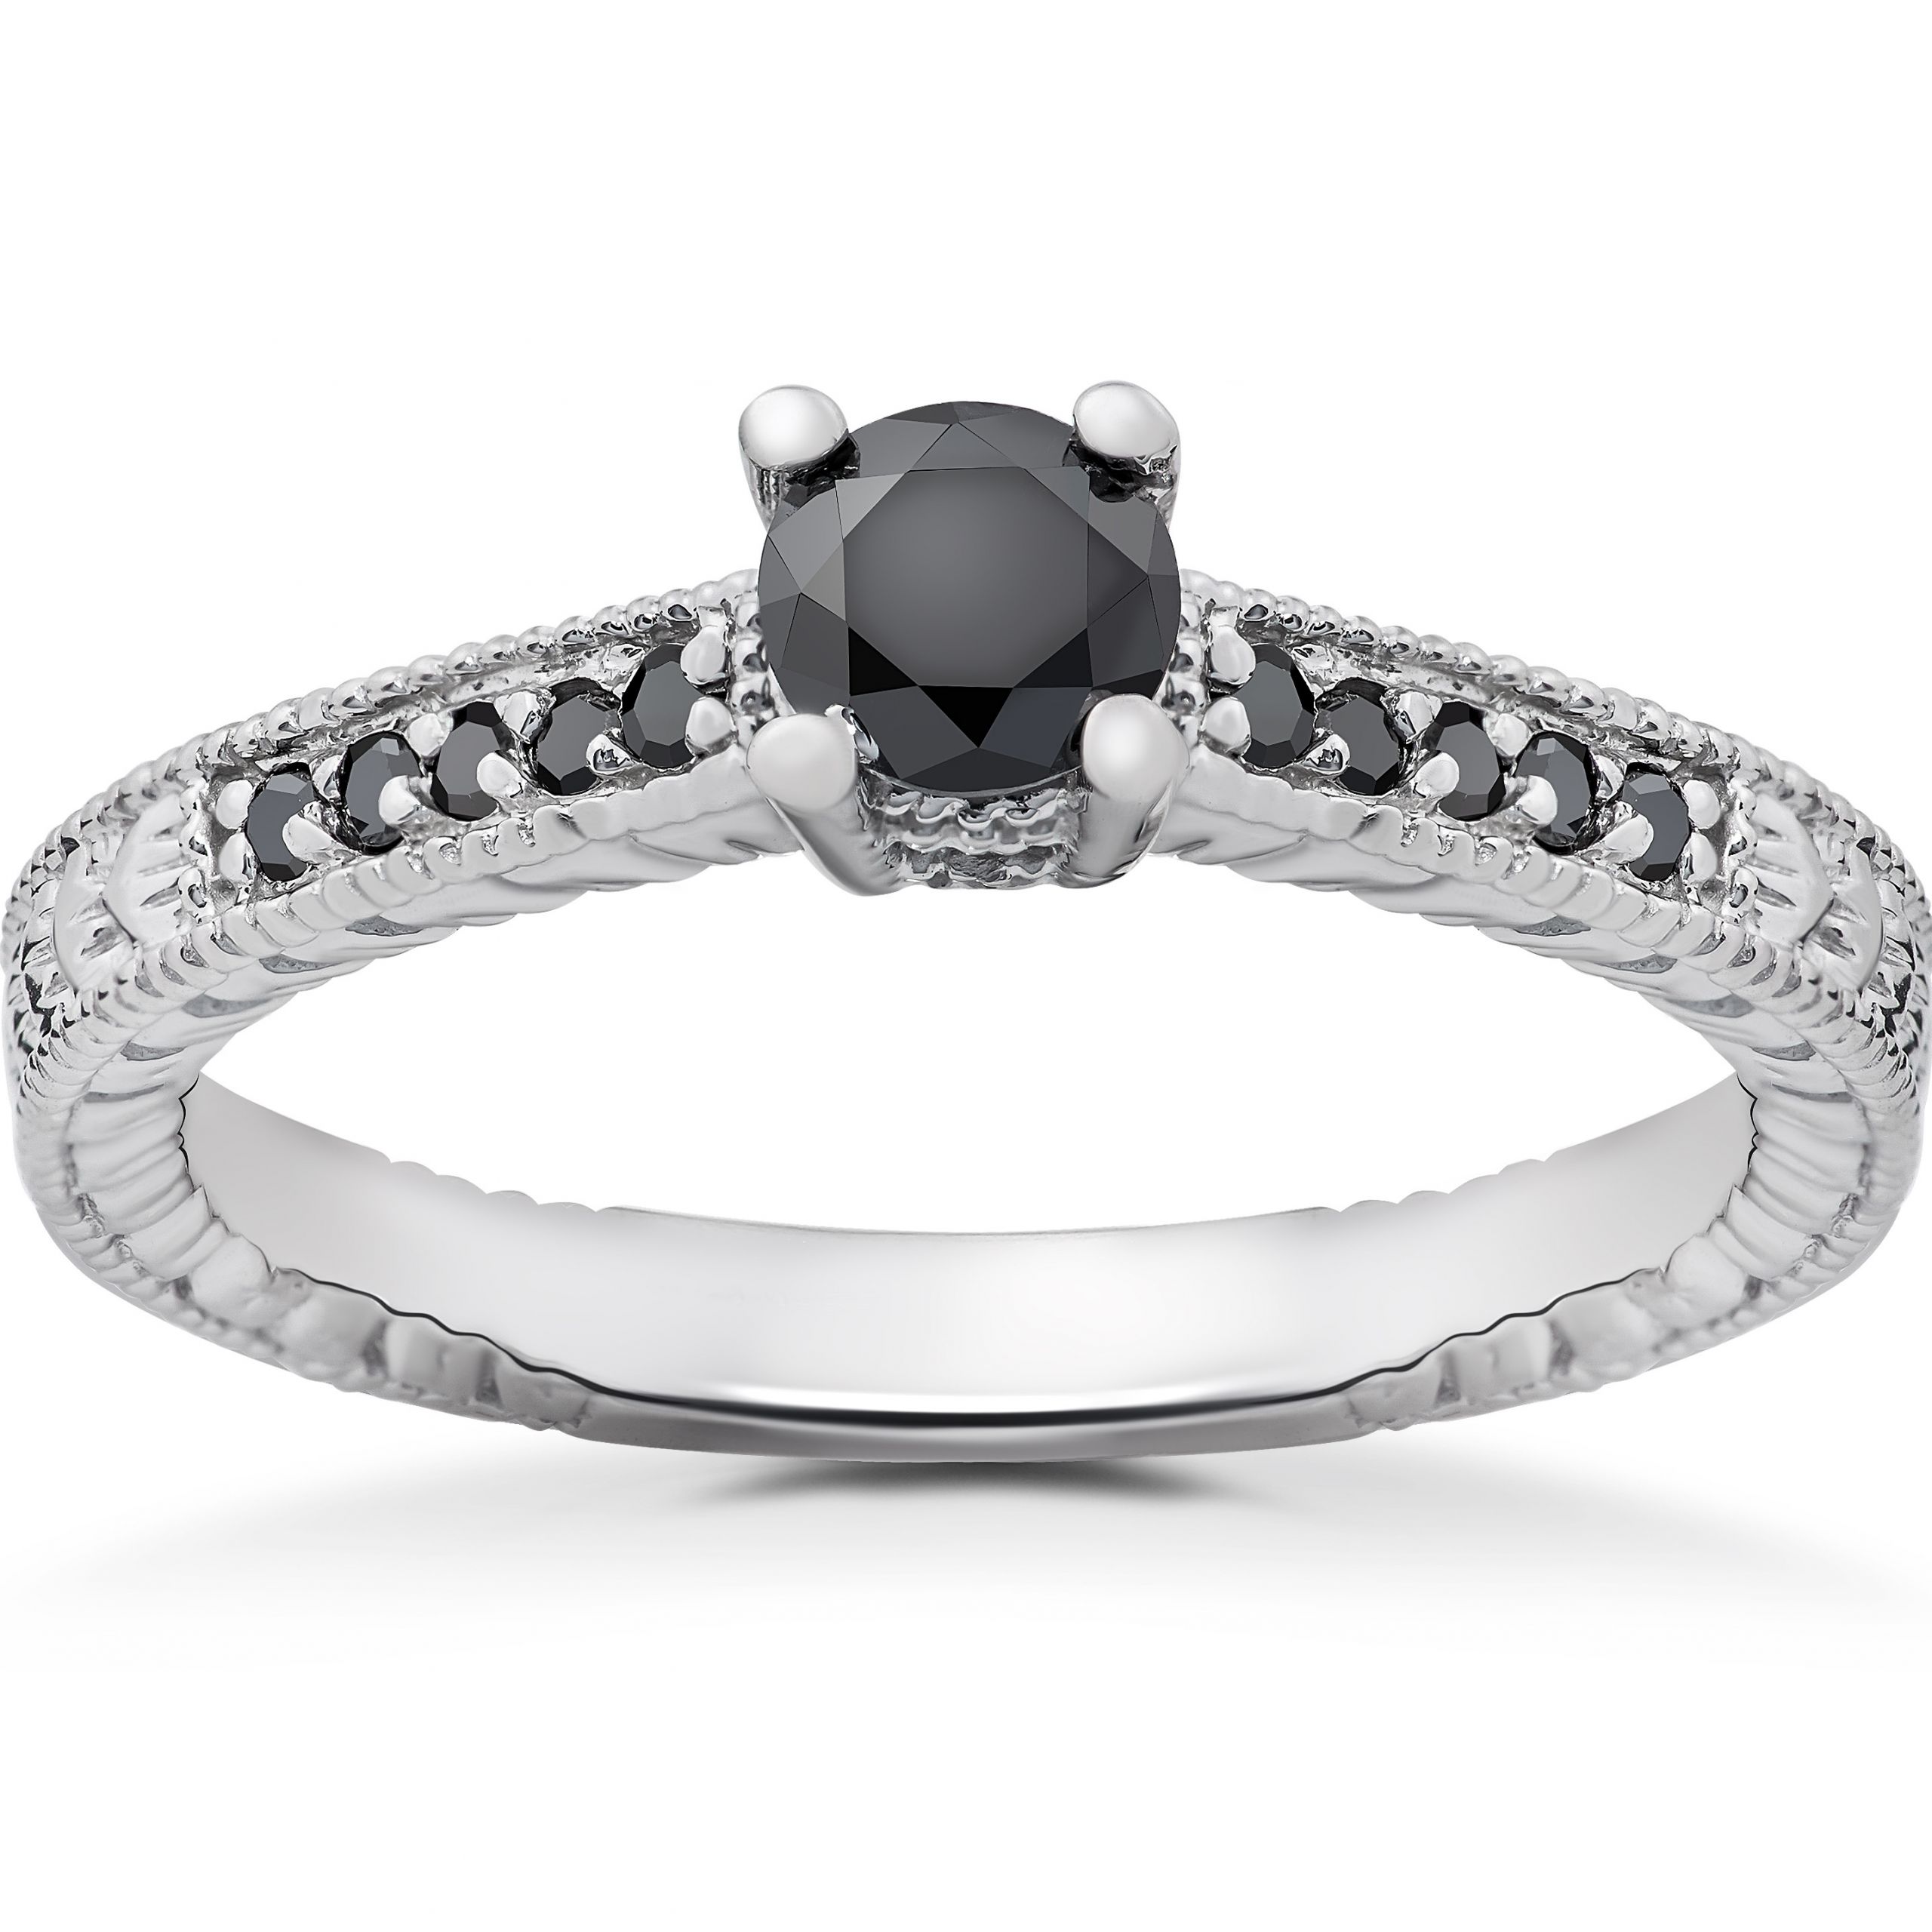 Wedding Rings Black Diamond
 1 2 ct Black Diamond Vintage Engagement Ring 14k White